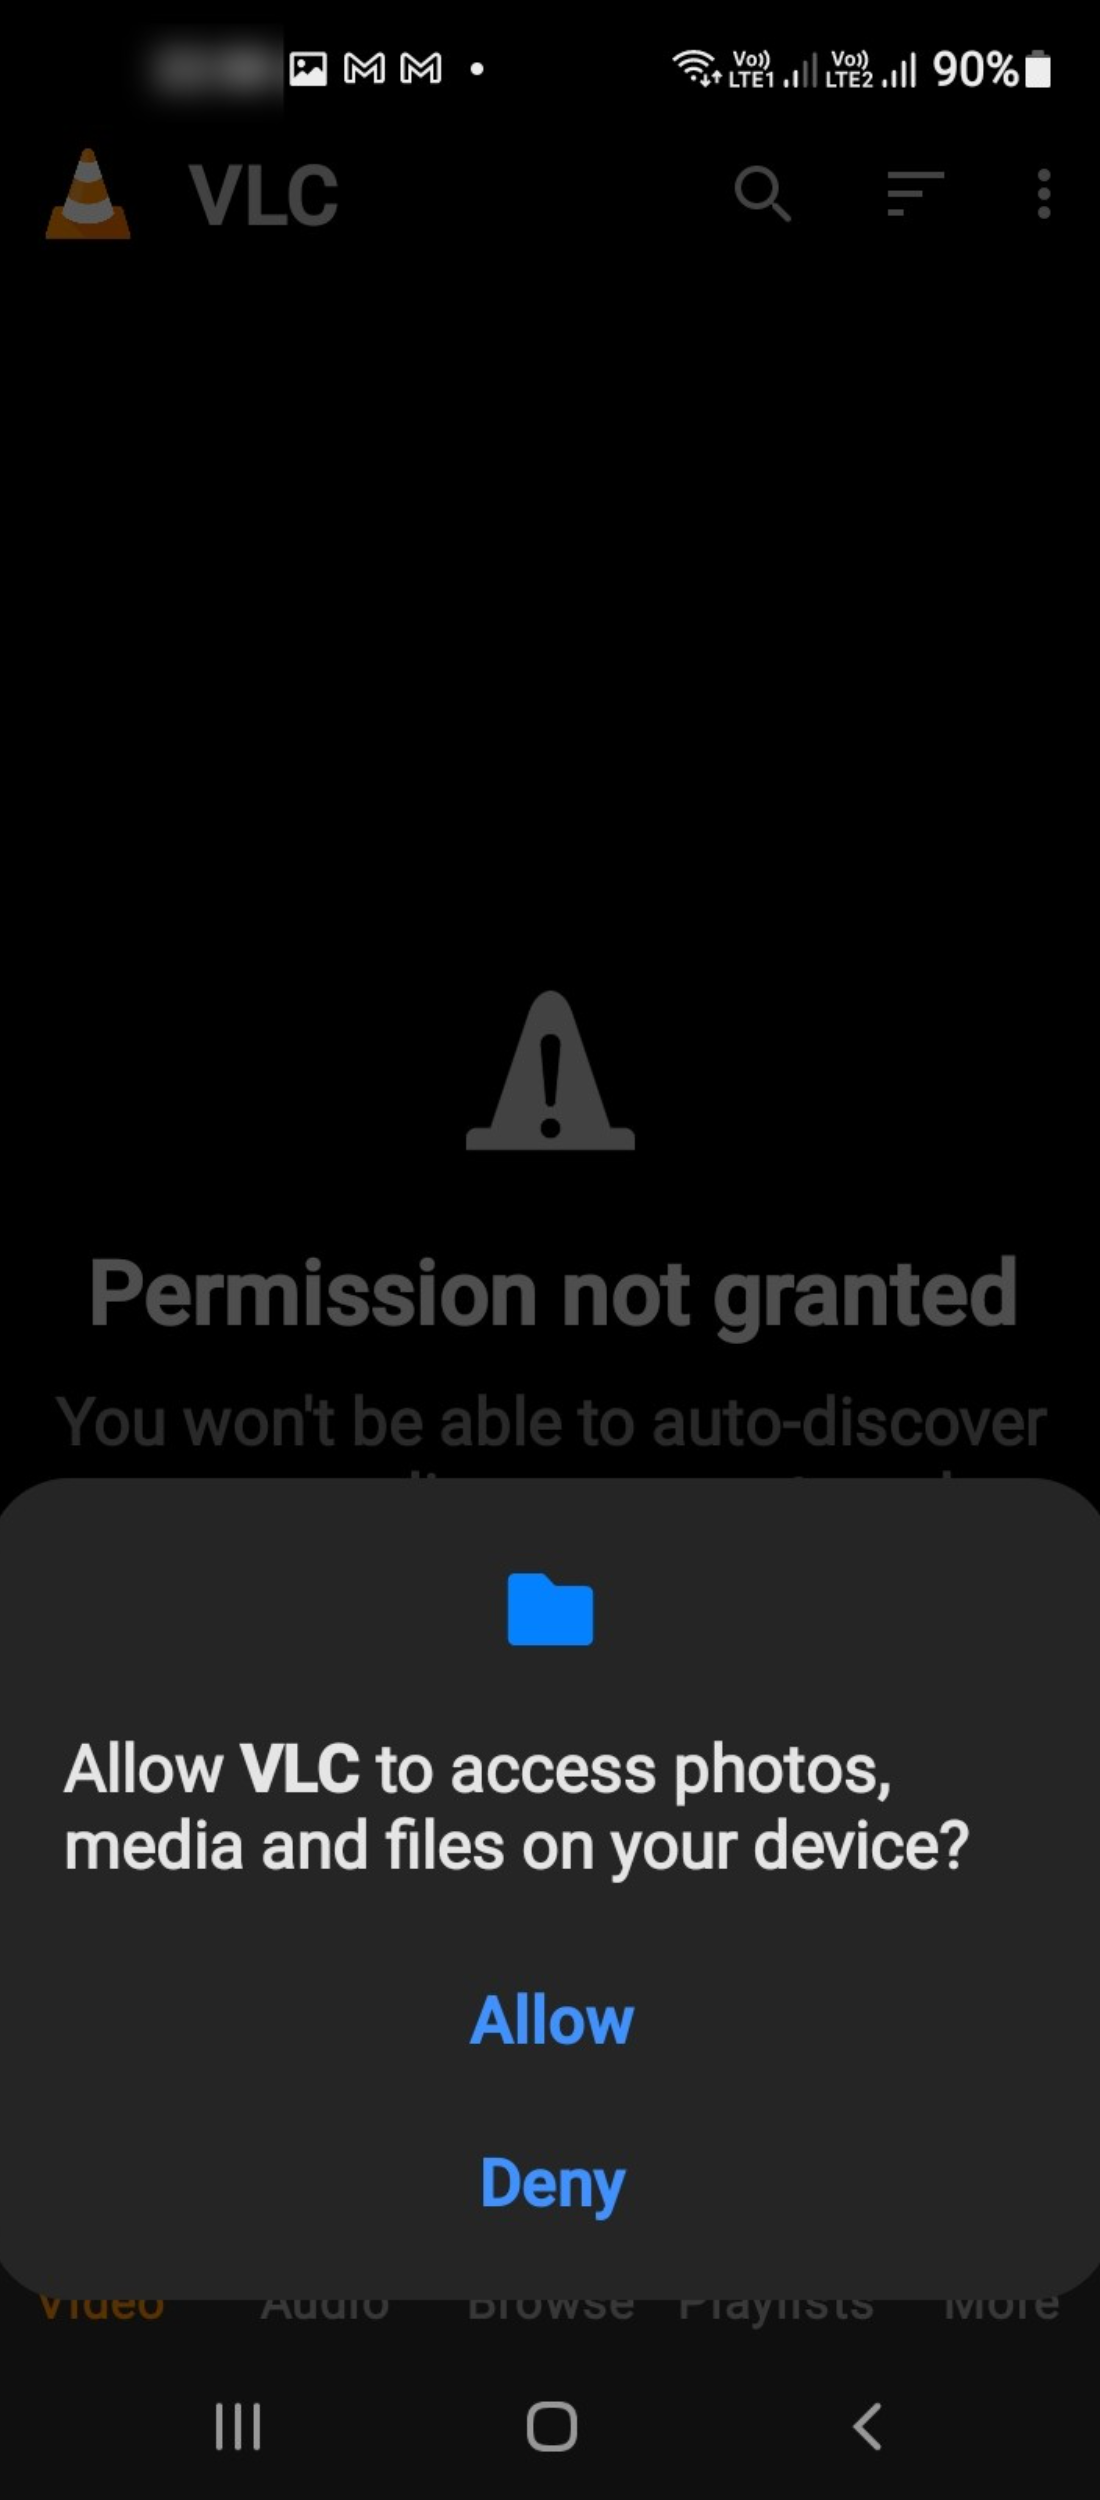 External storage access for VLC app